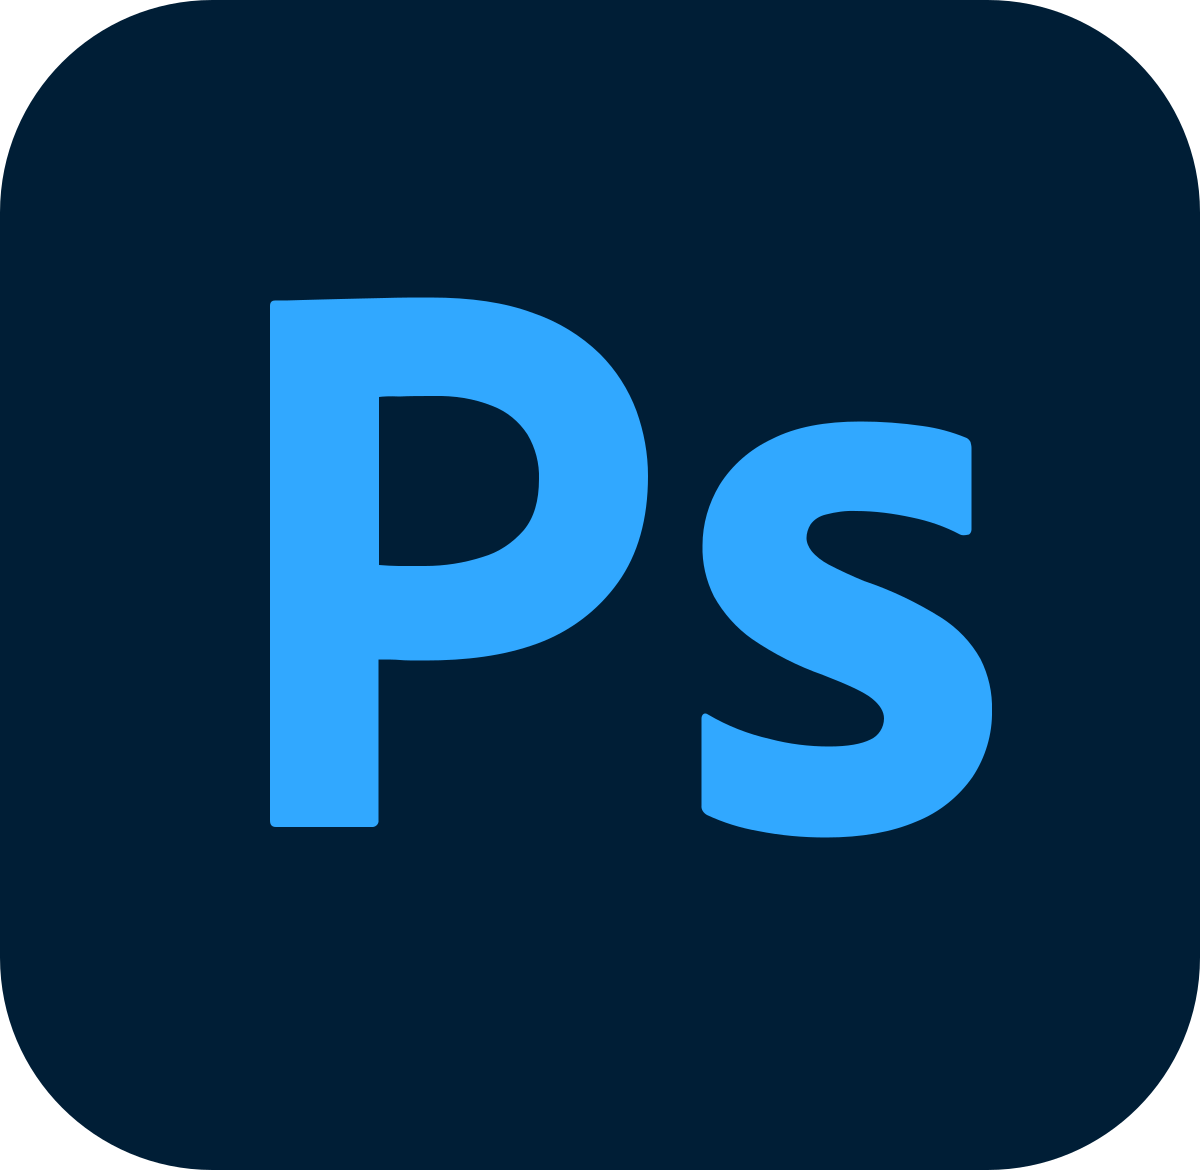 photoshop software